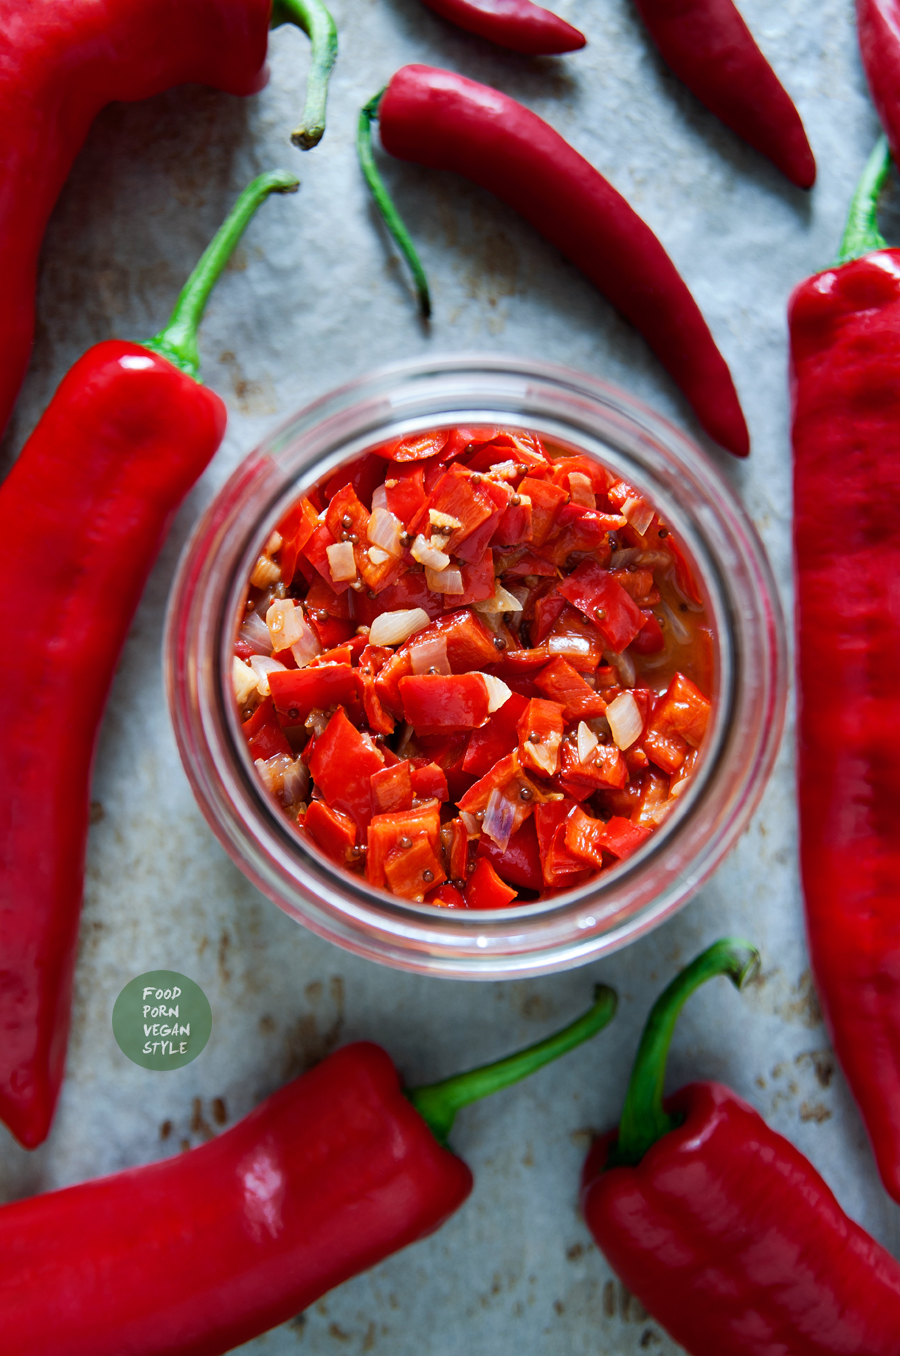 Sweet&spicy ramiro pepper chutney